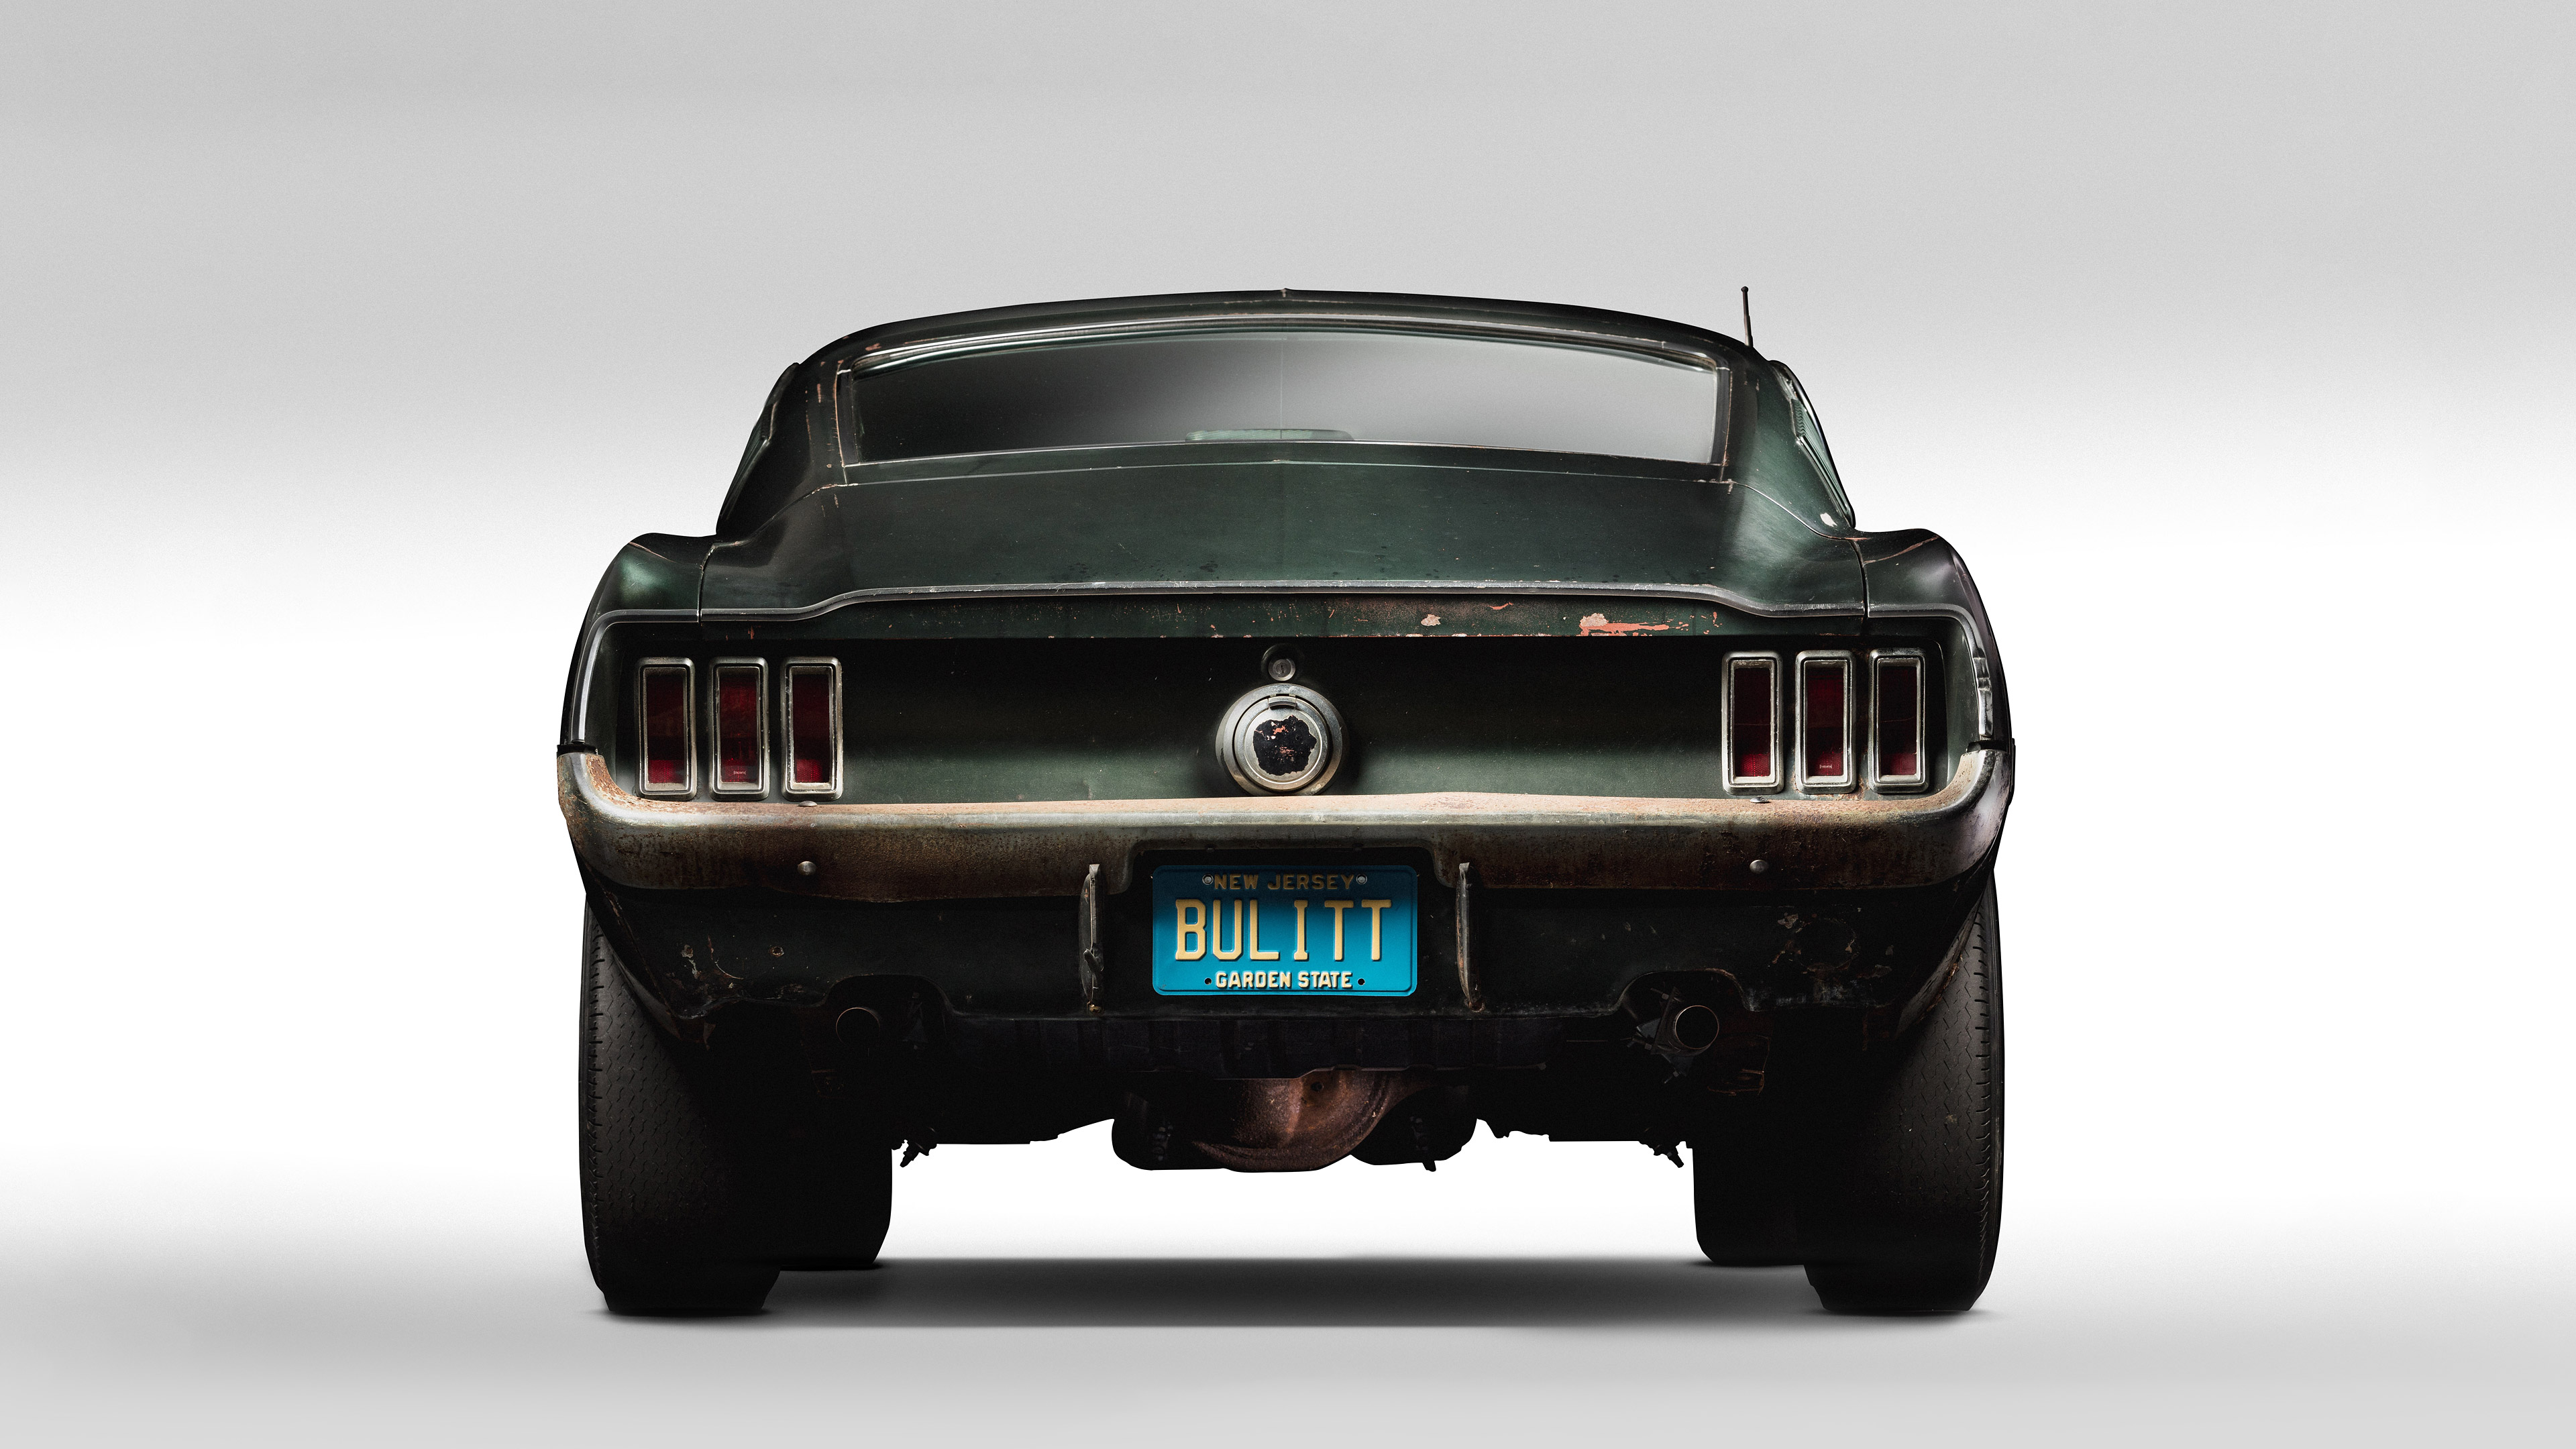  1968 Ford Mustang GT Bullitt Wallpaper.